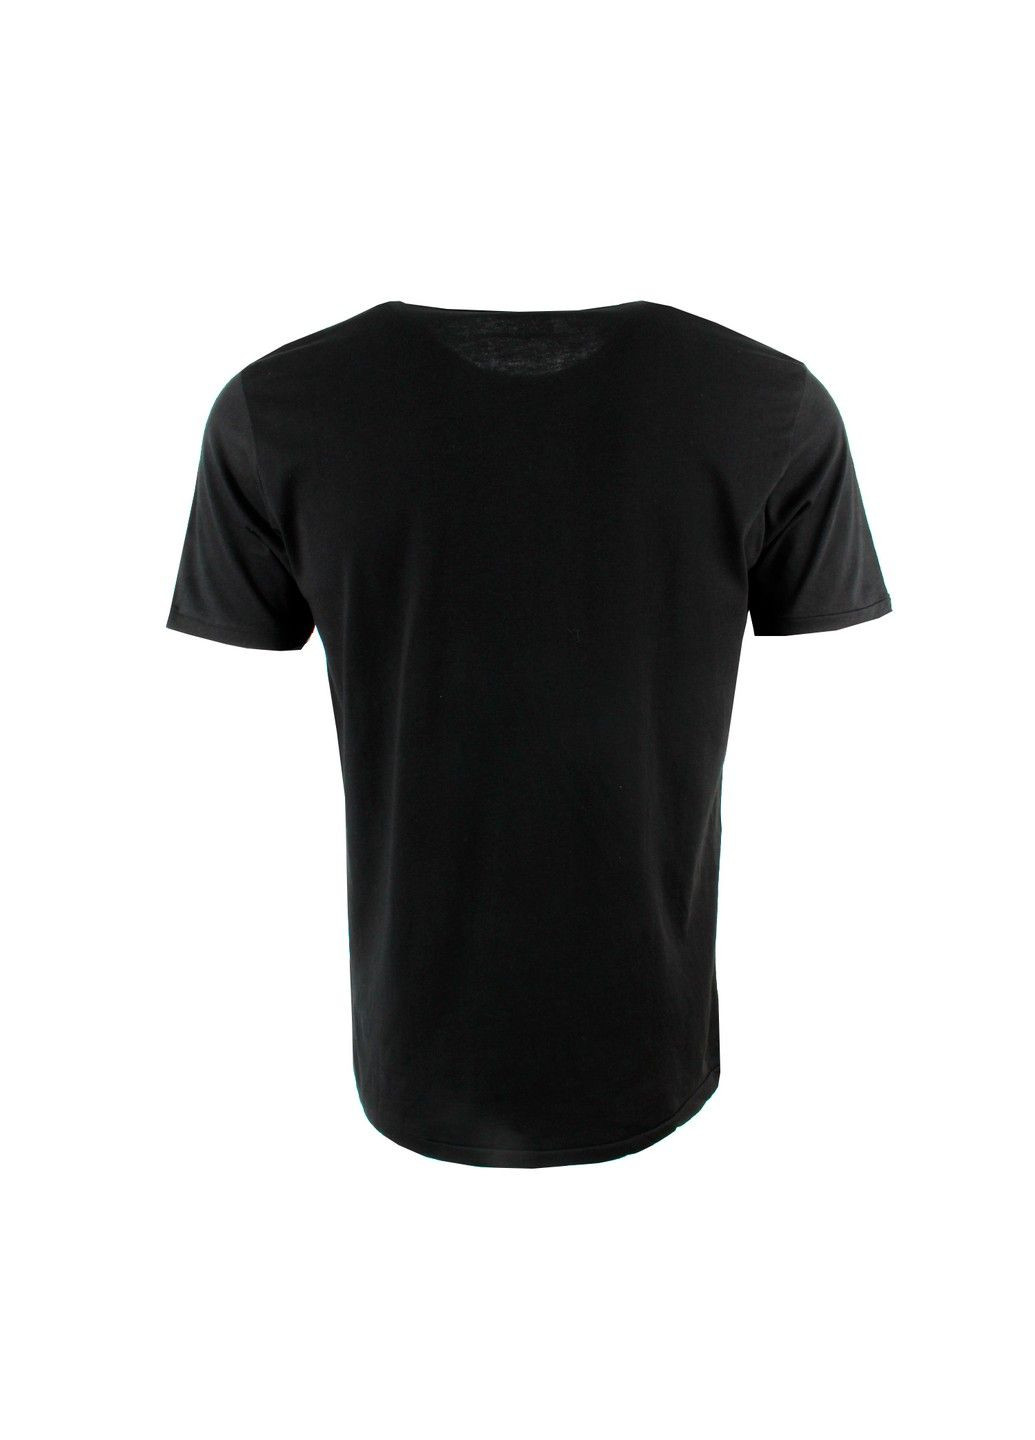 Черная мужская футболка top look No Brand